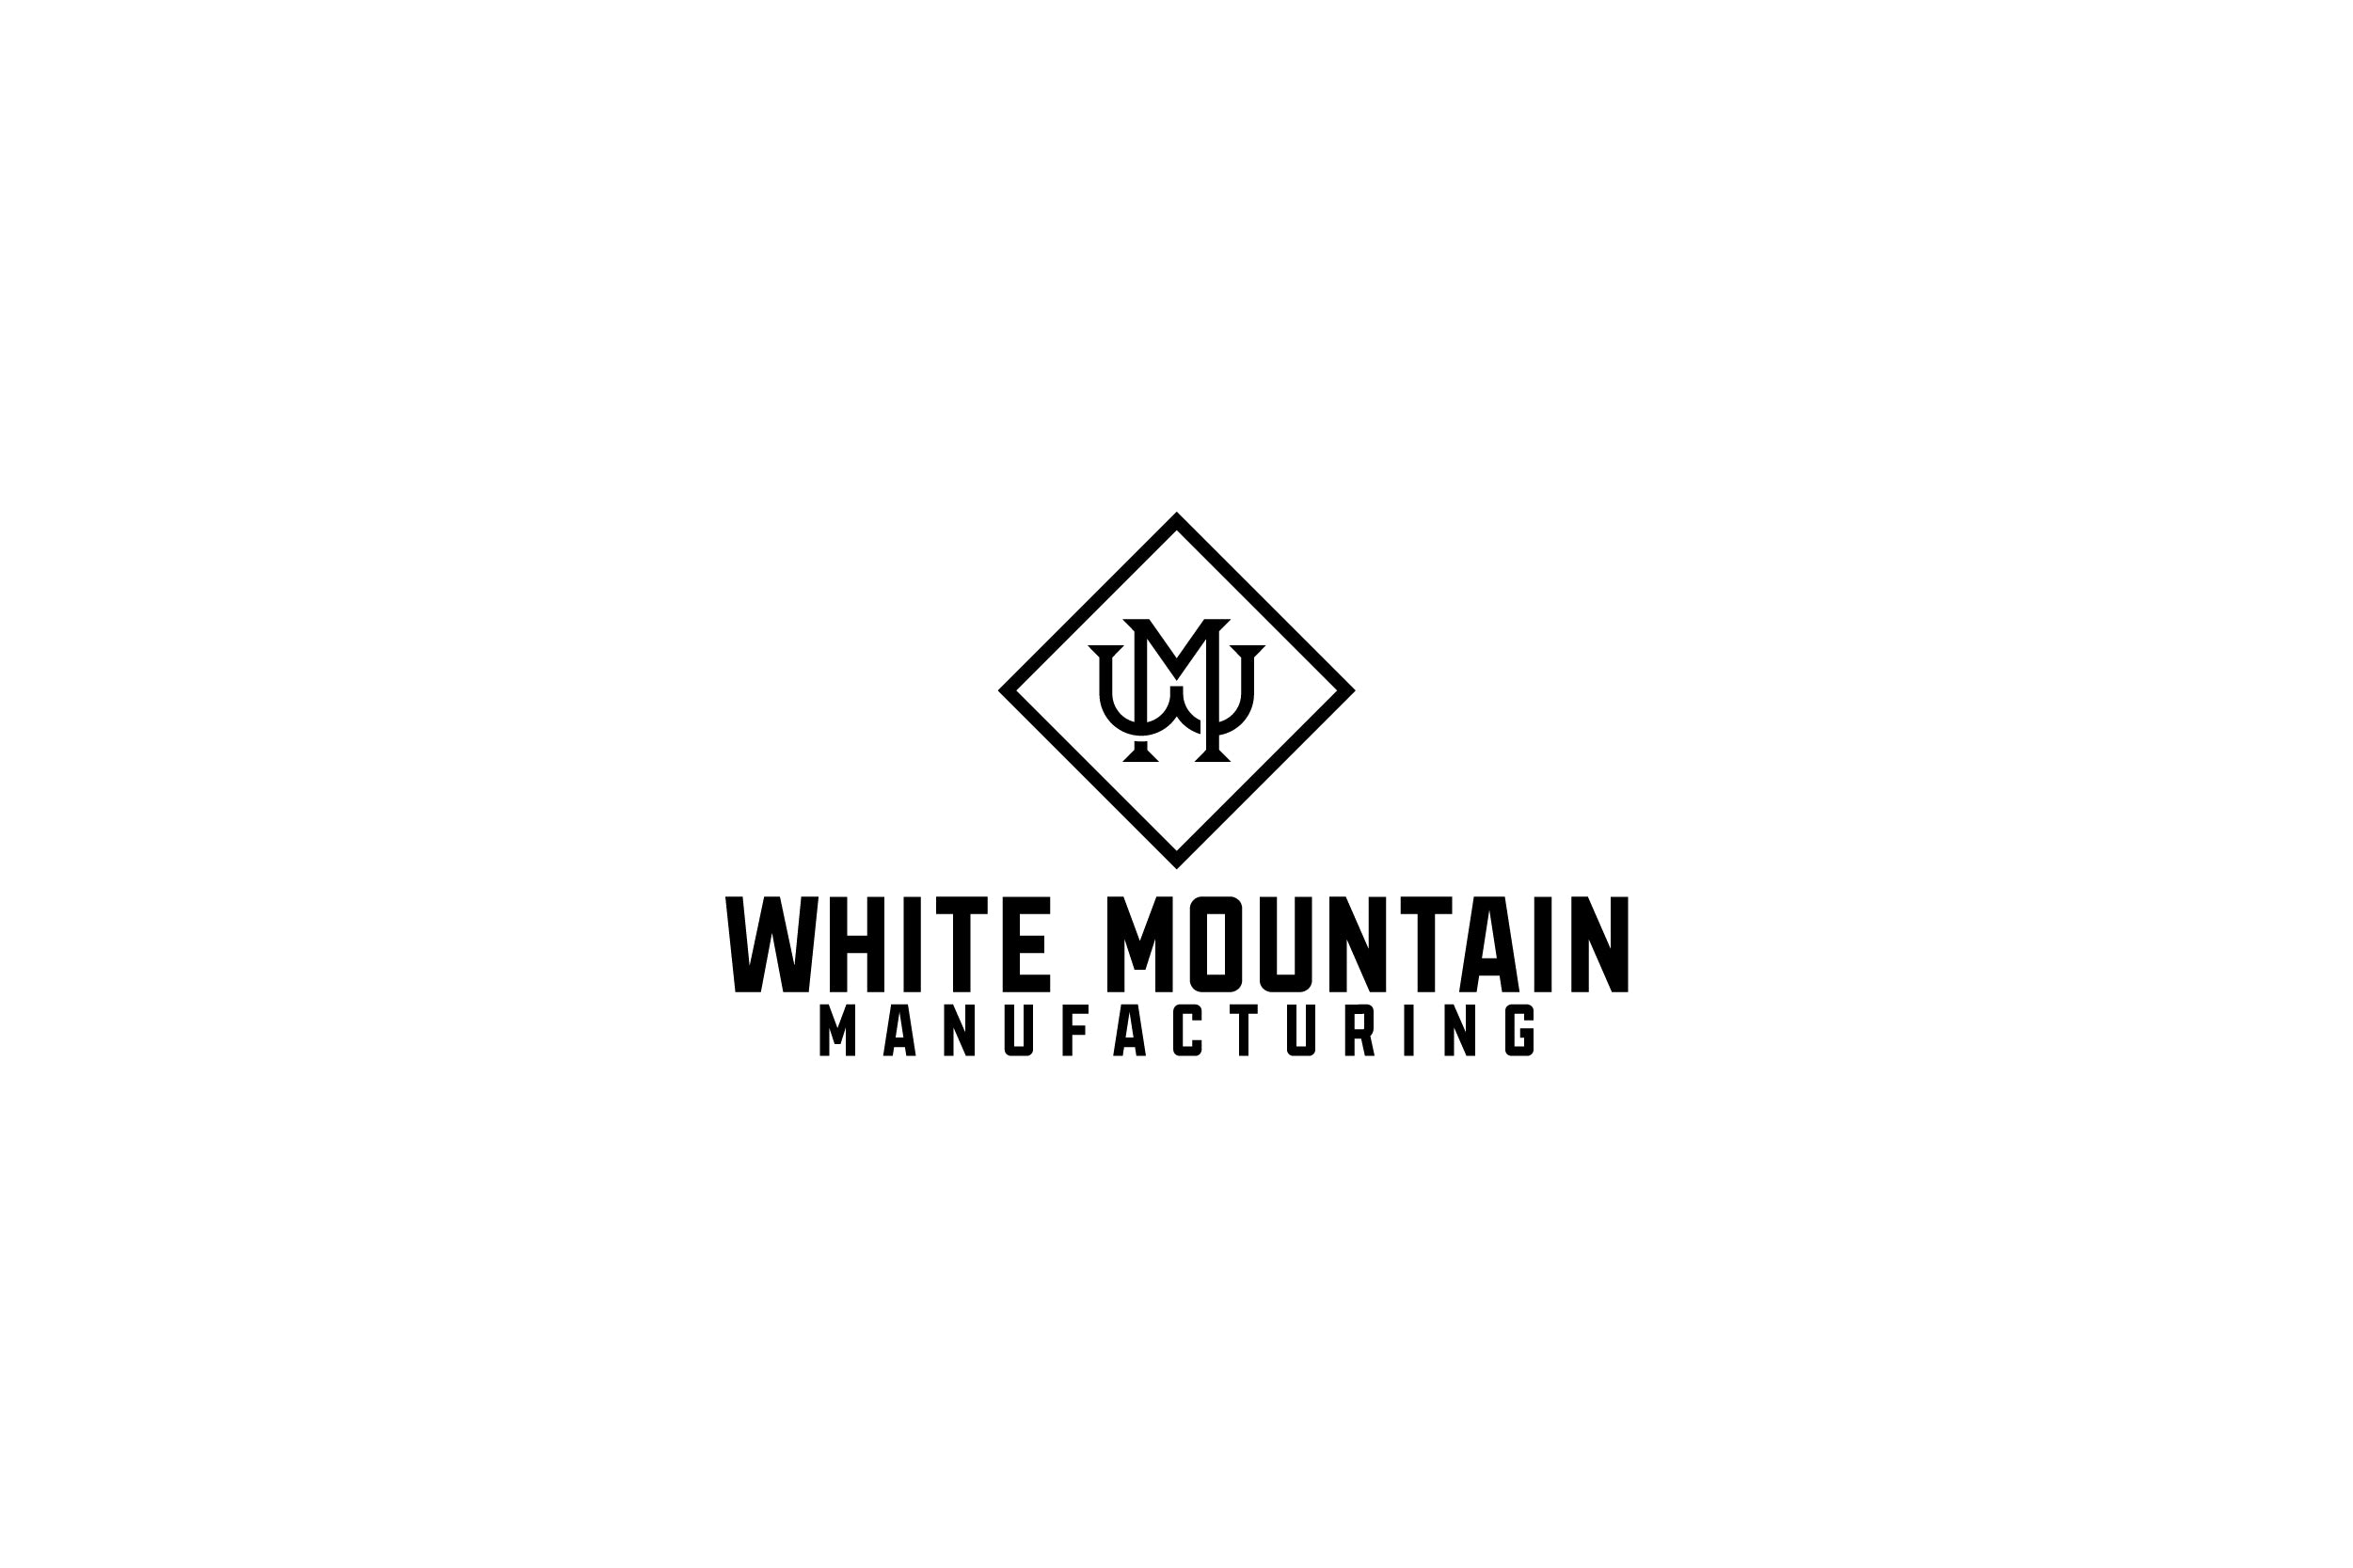 White Mountain Manufacturing